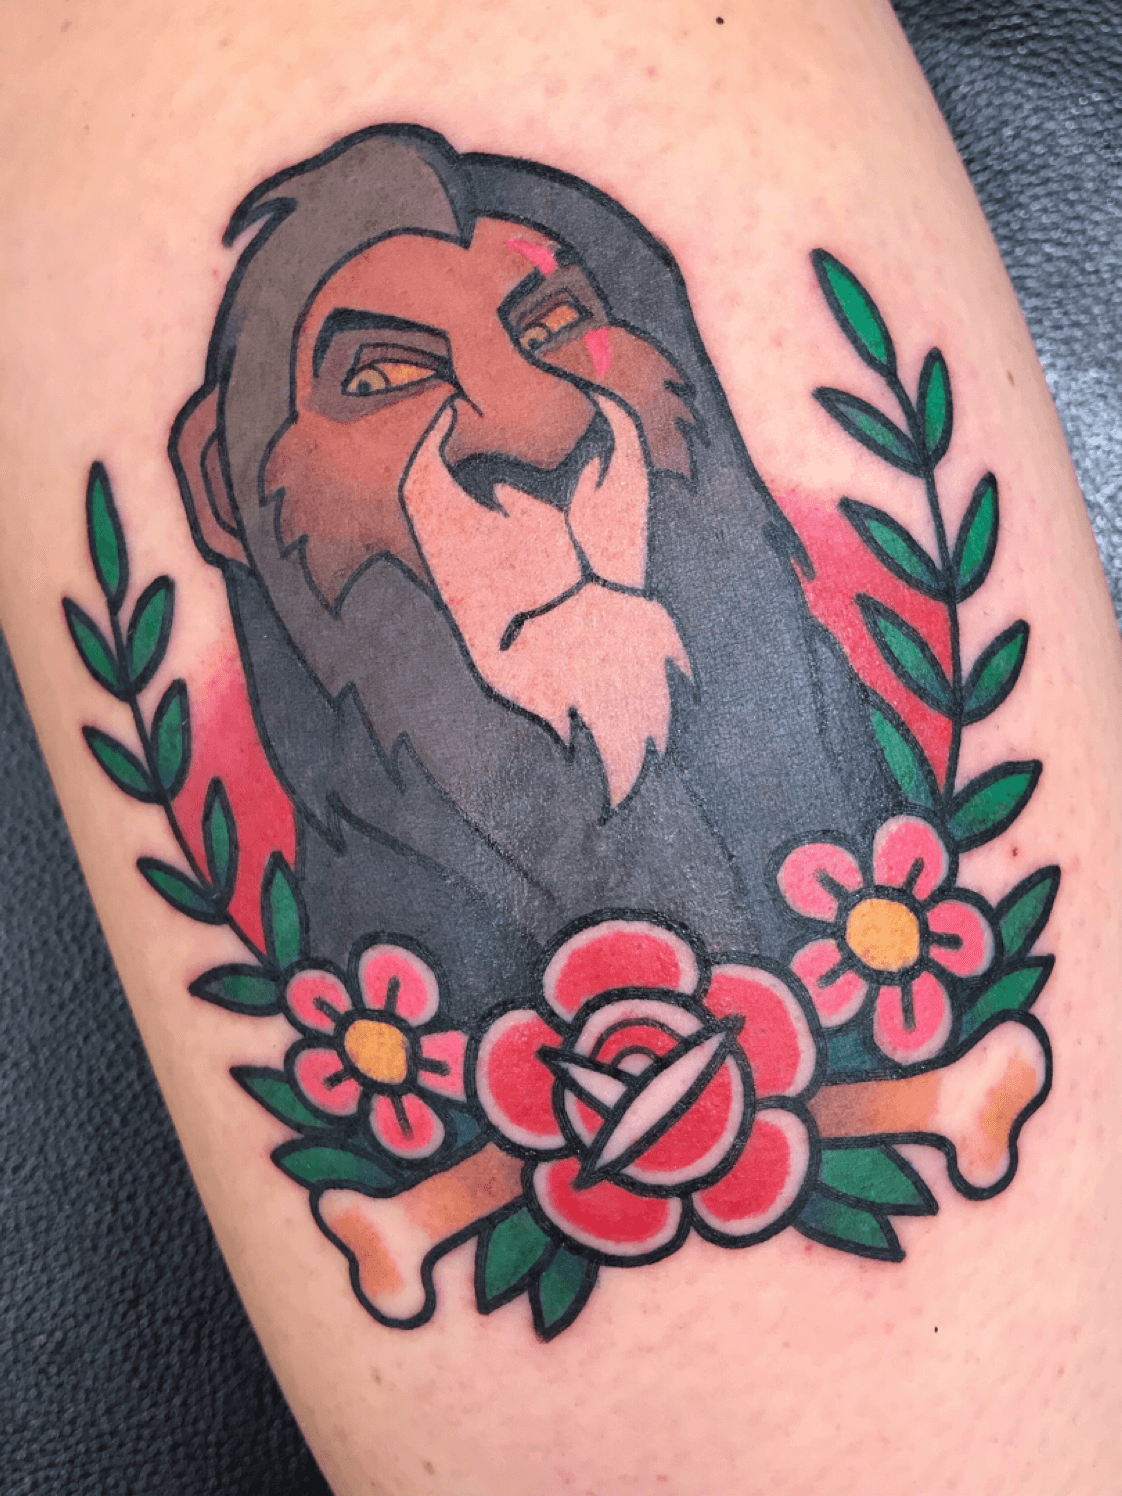 Scar Tattoo  Lion King Tattoo  Tatuagens Artesanato